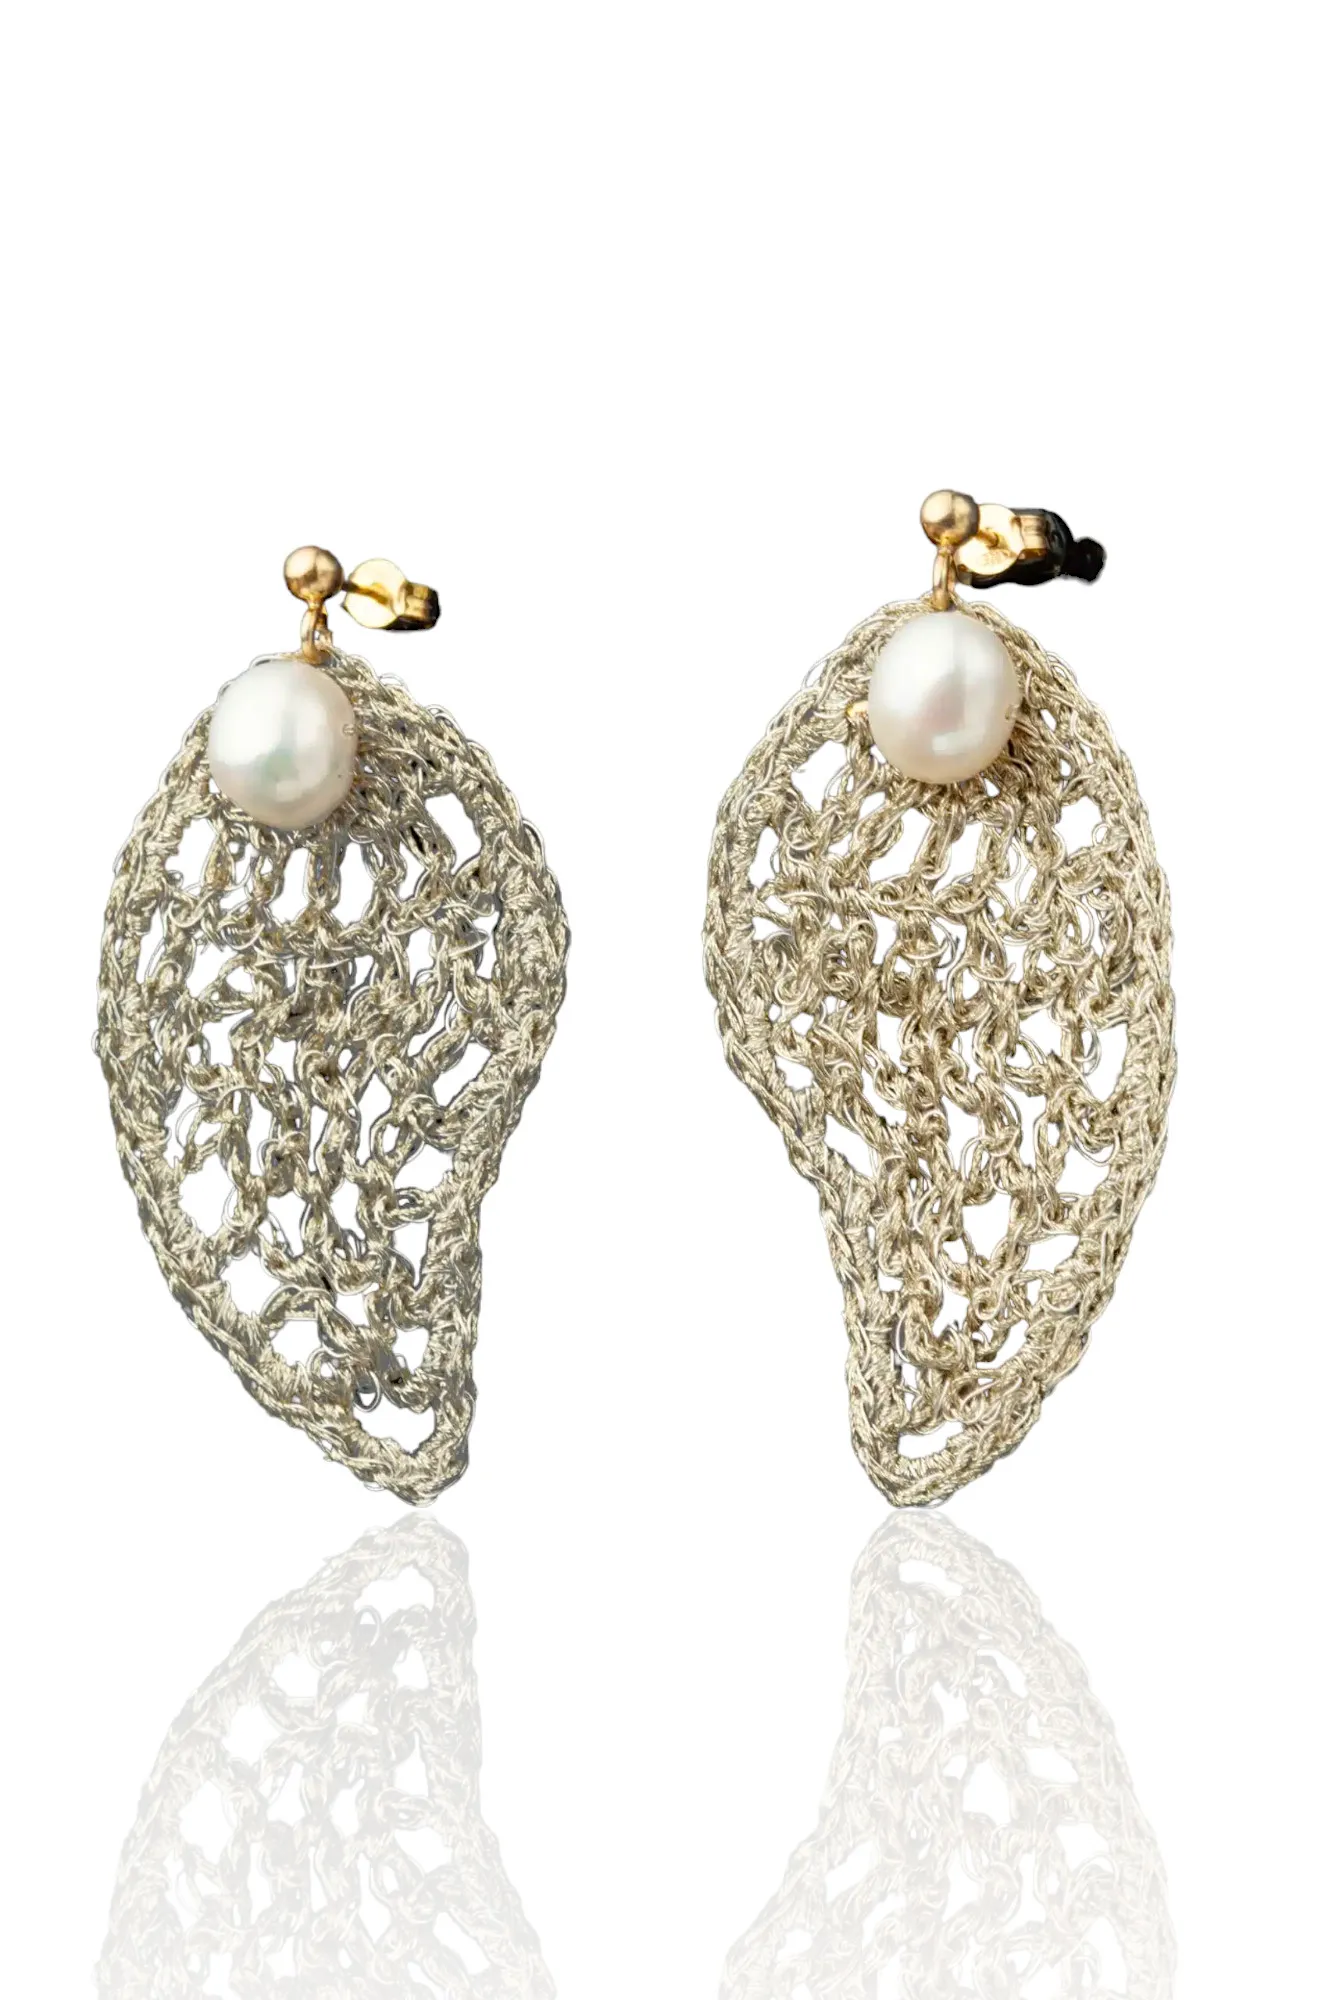 Handmade Jewellery | Paisley crochet knit silver earrings with pearls main